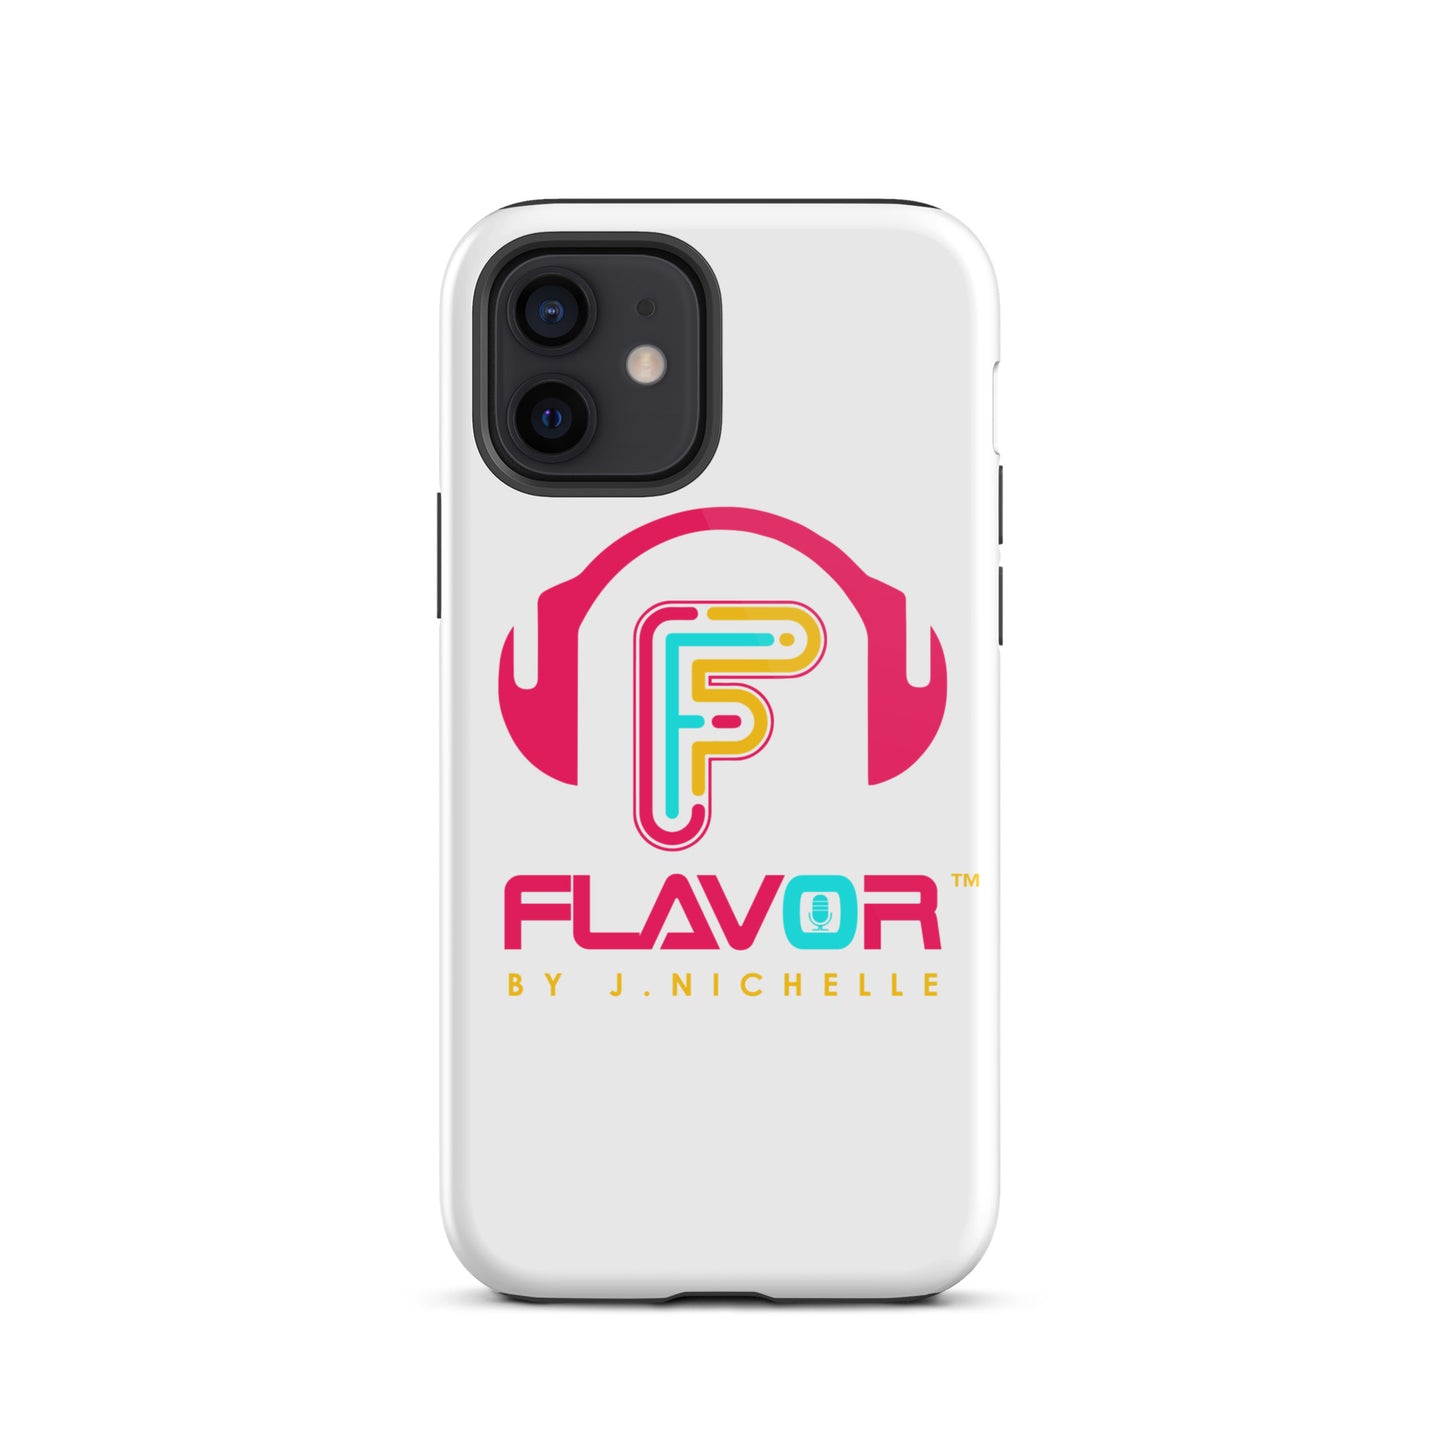 Flavor Tough Case for iPhone®